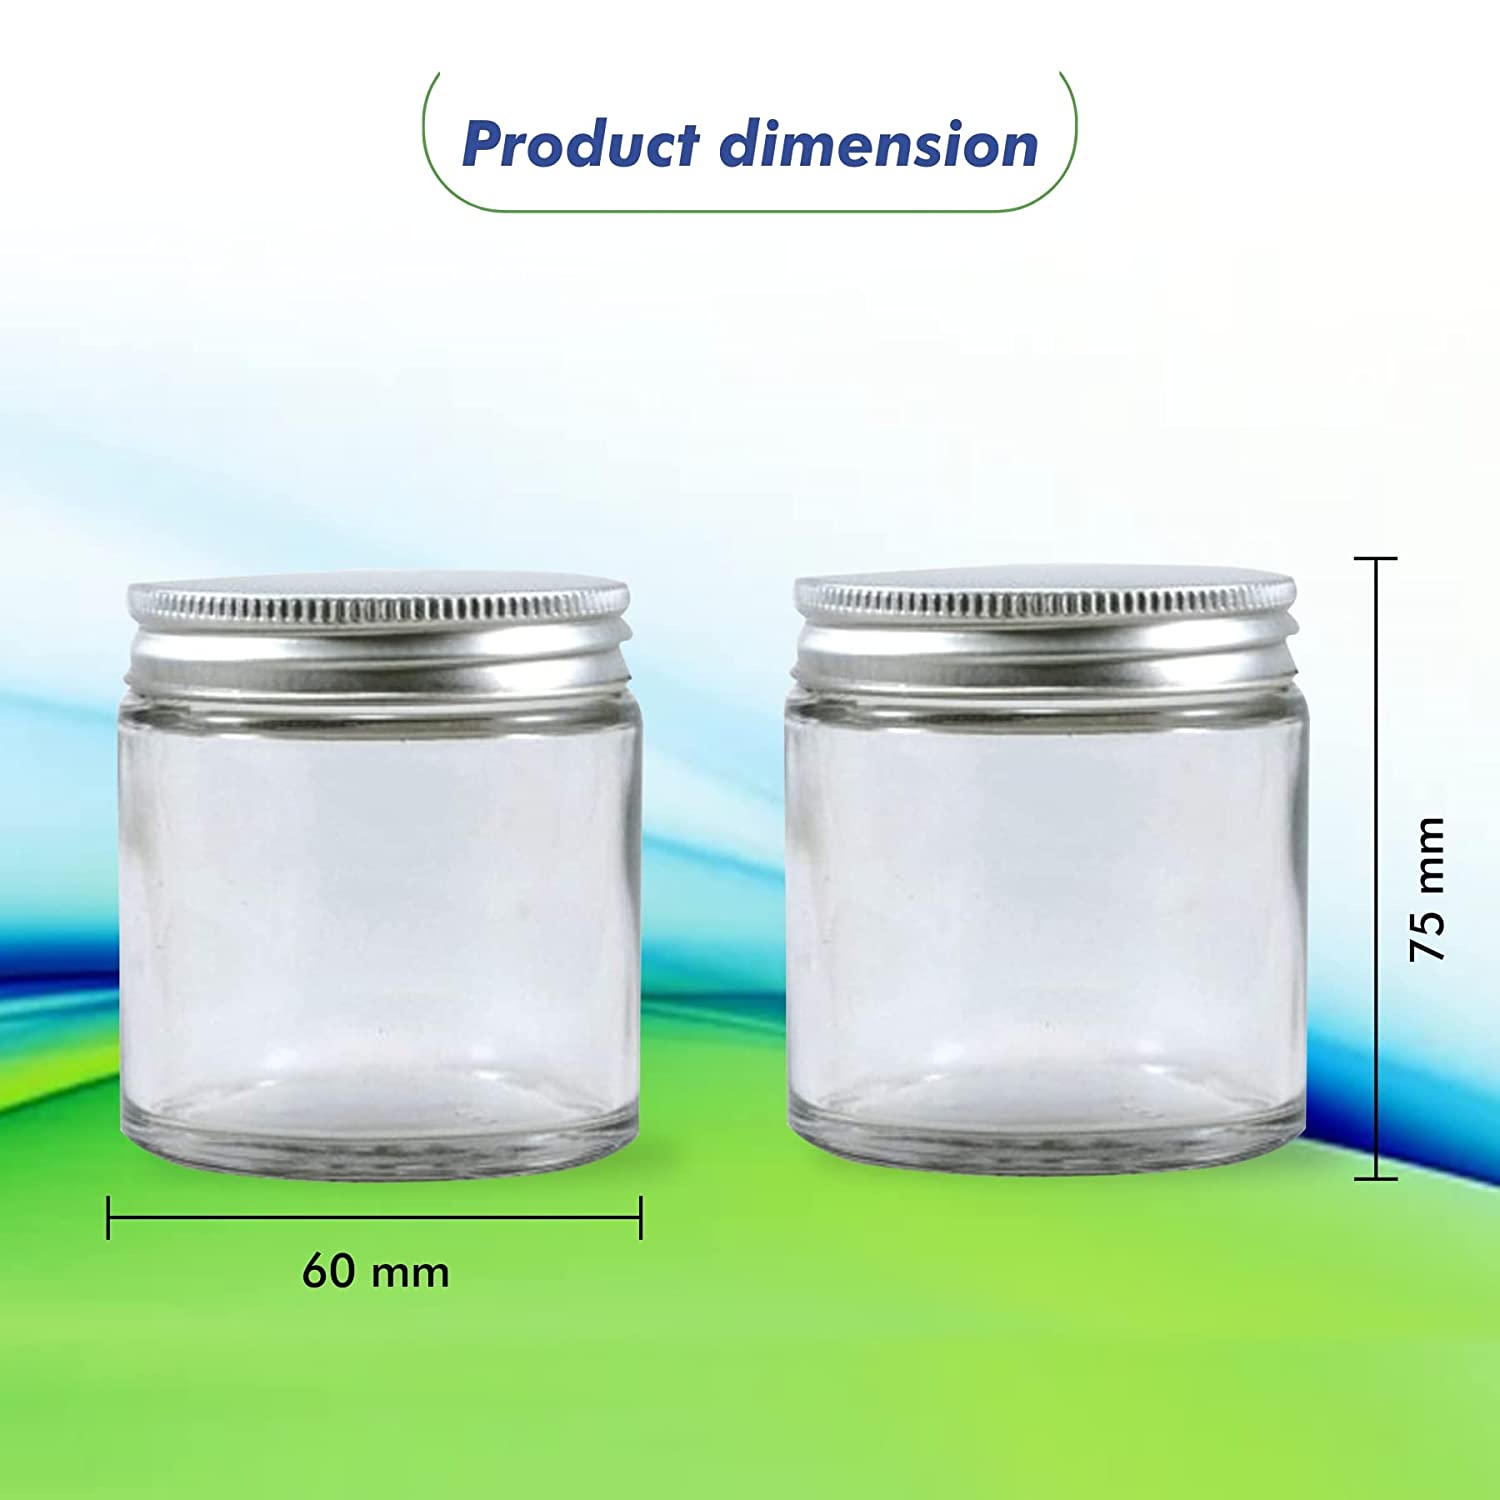 Shoprythm Packaging,Cosmetic Jar Glass jar with ALUMINIUM CAP